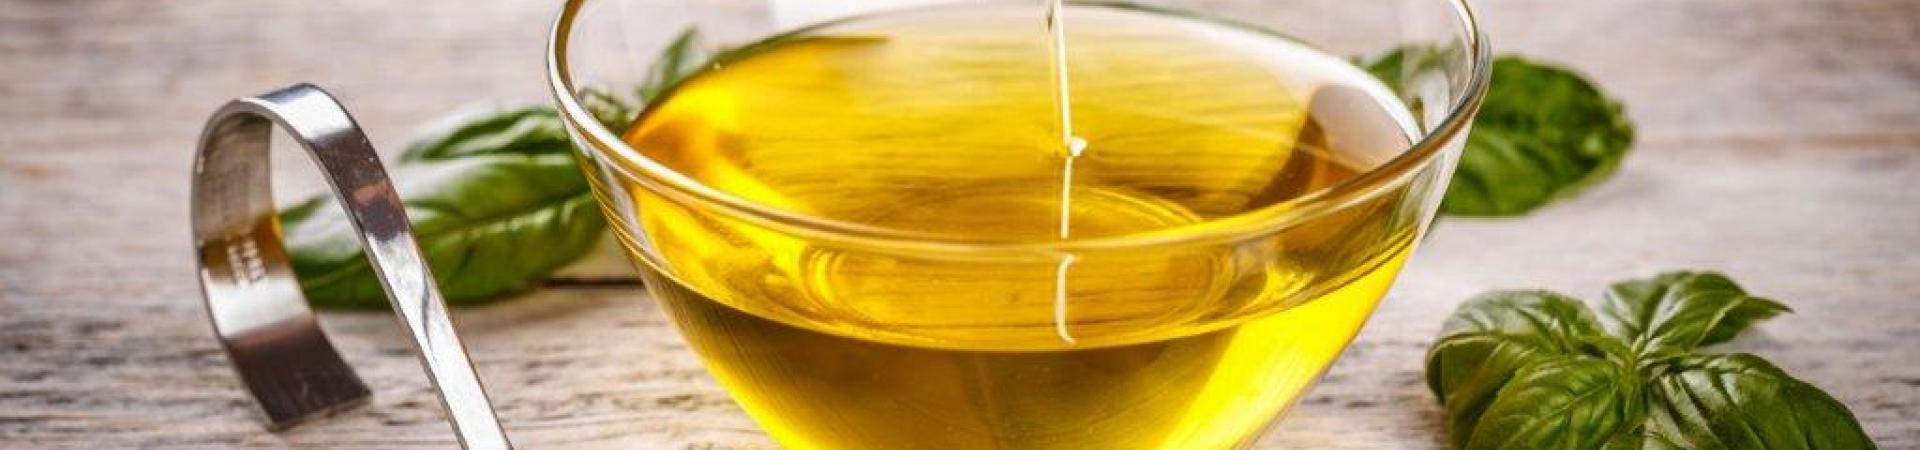 olive-oil-cw3p8xt.jpg